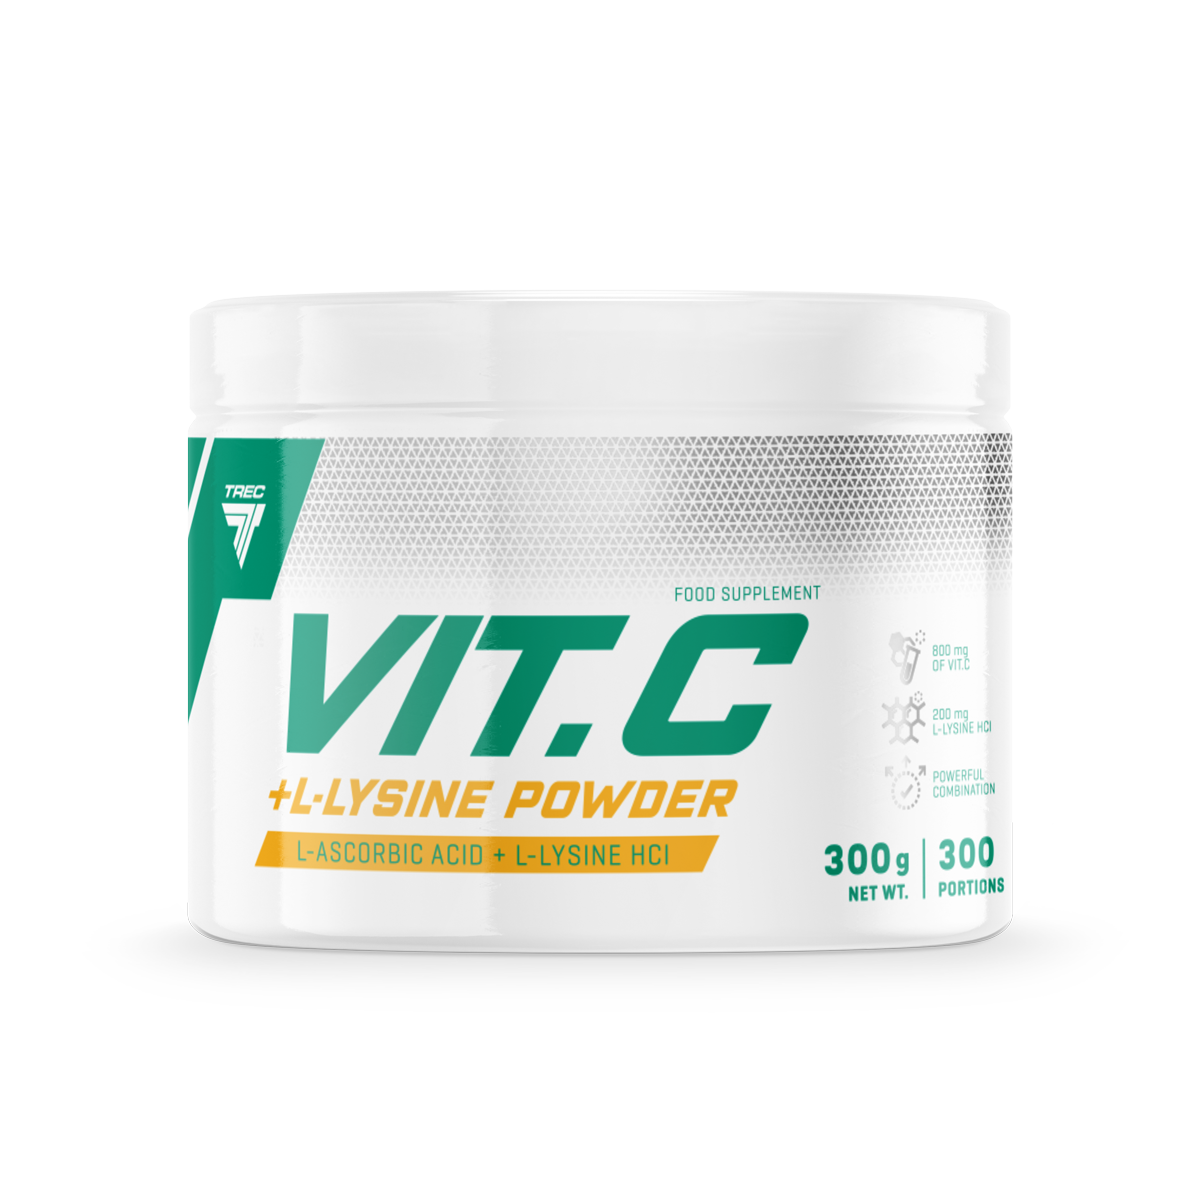 Vit. C + L-Lysine Powder